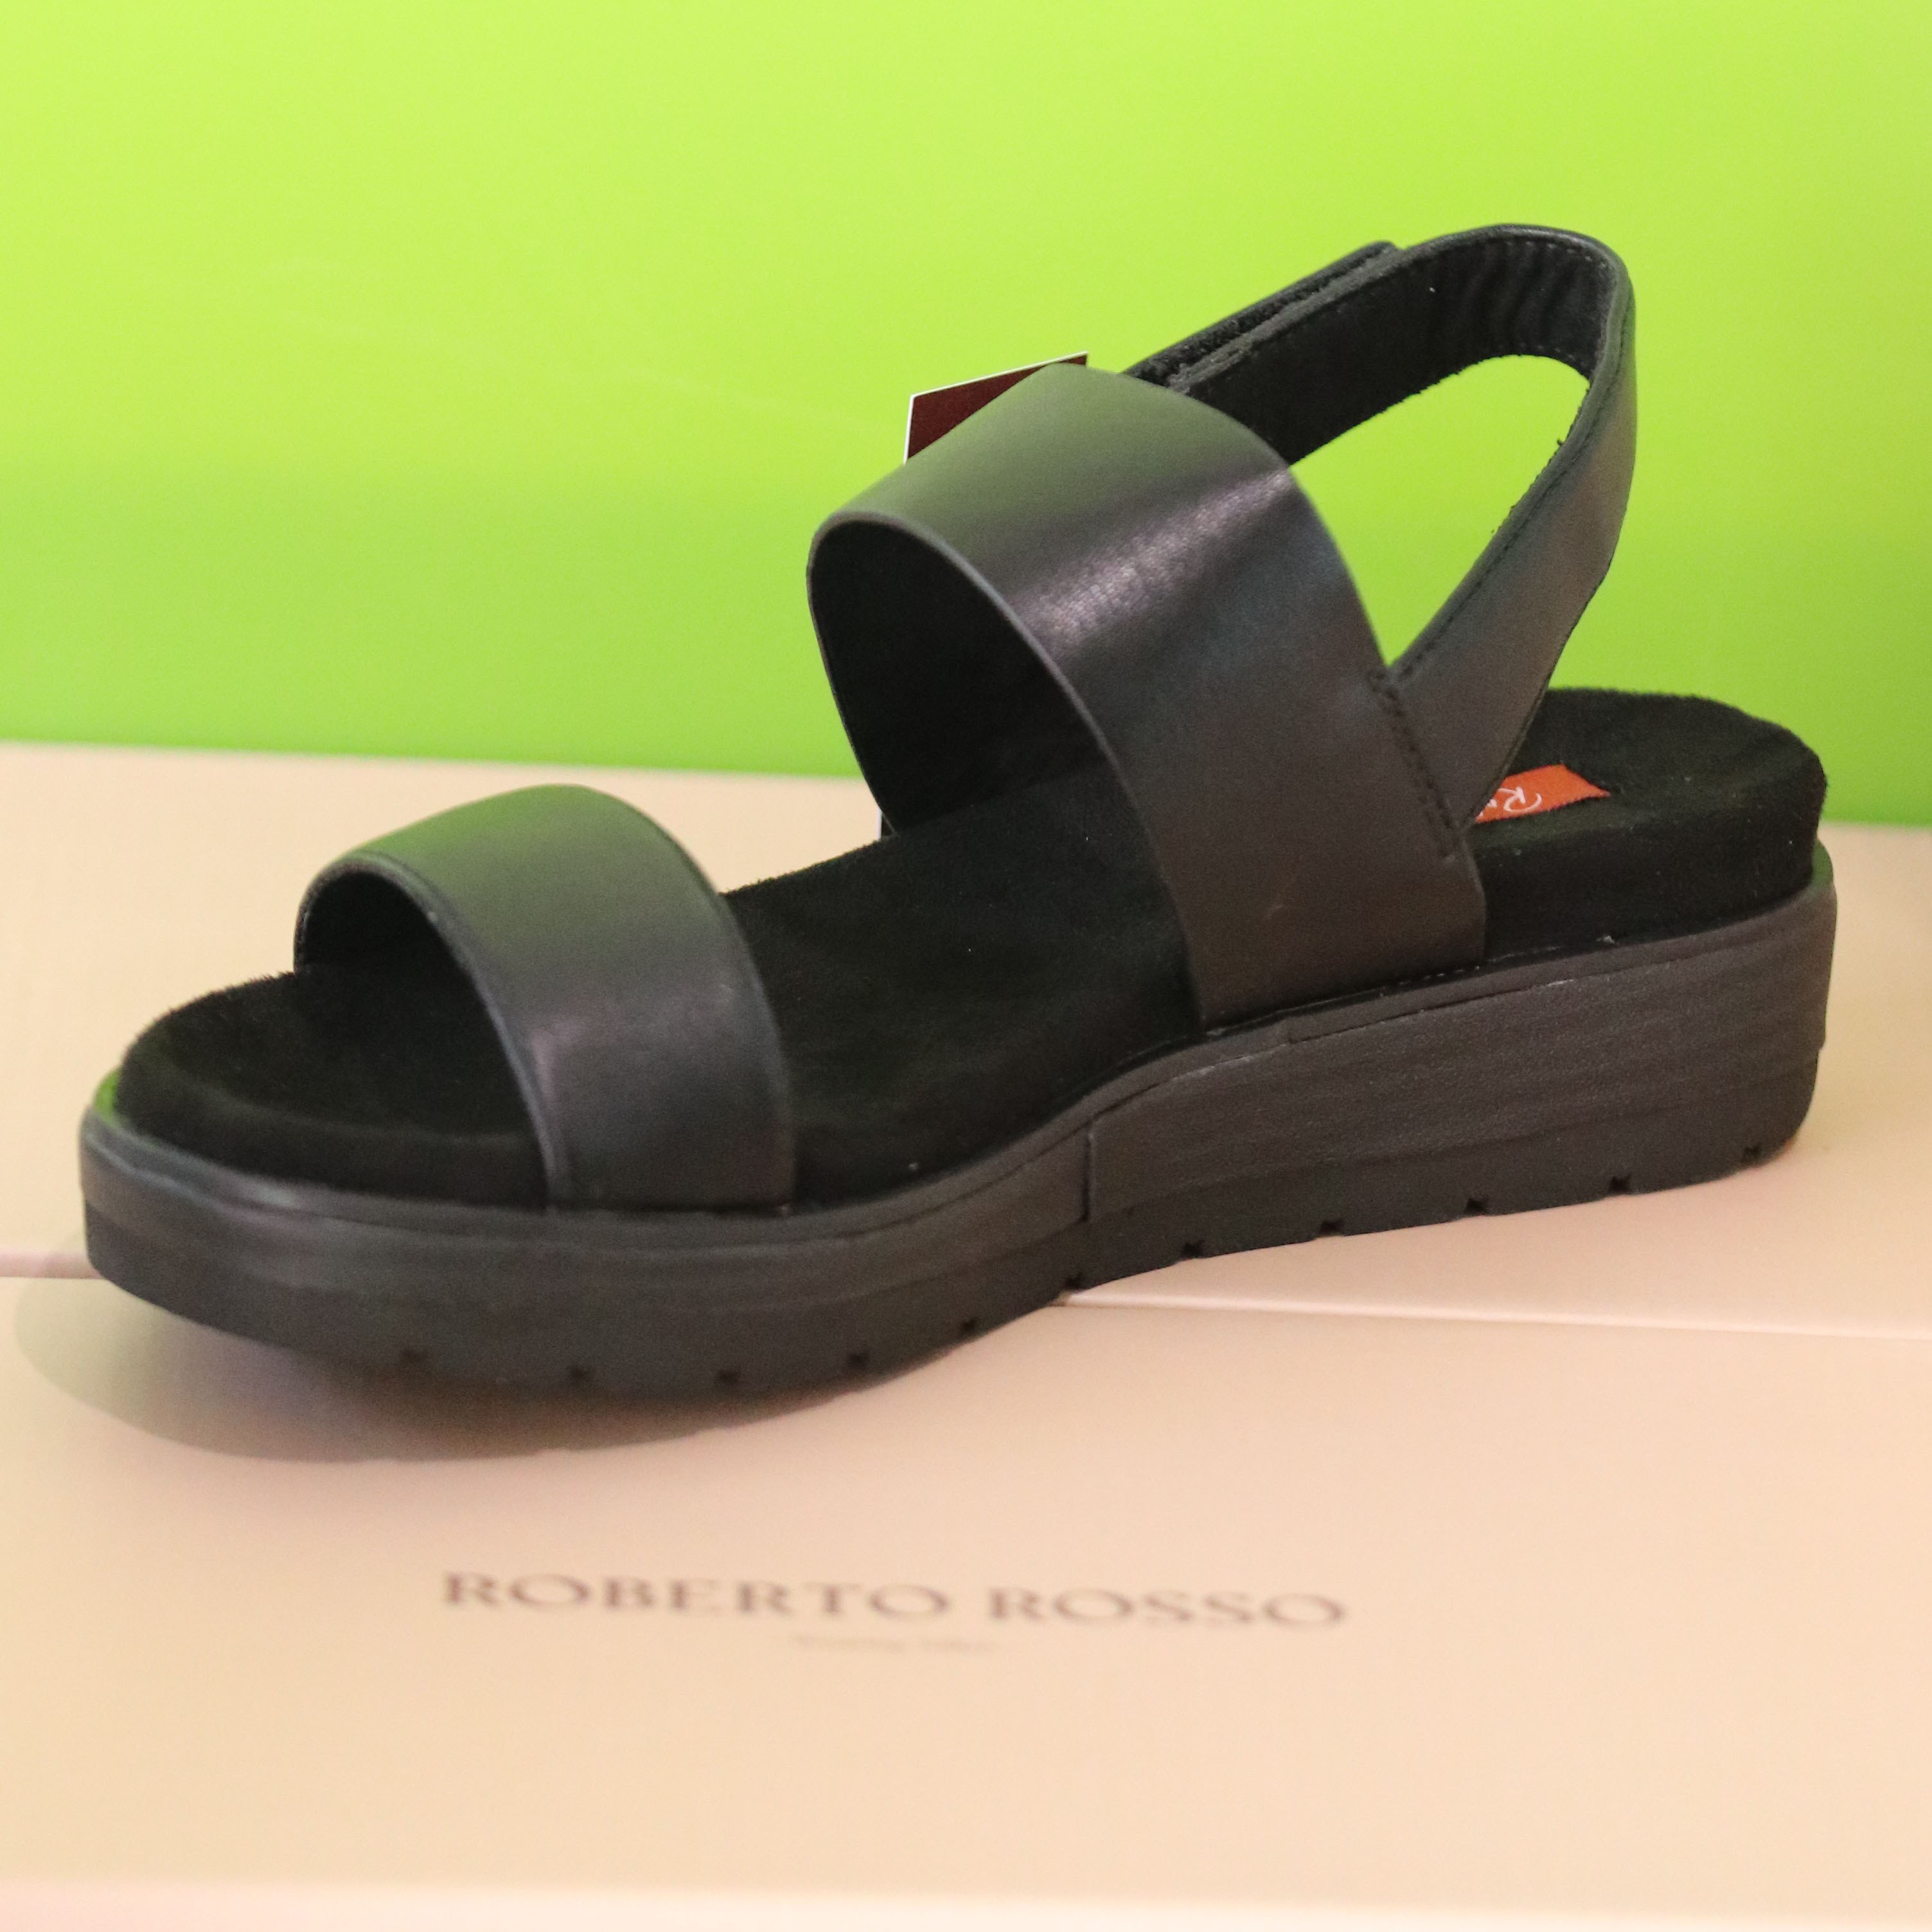 roberto rosso – astria black sandal dame sommer 3